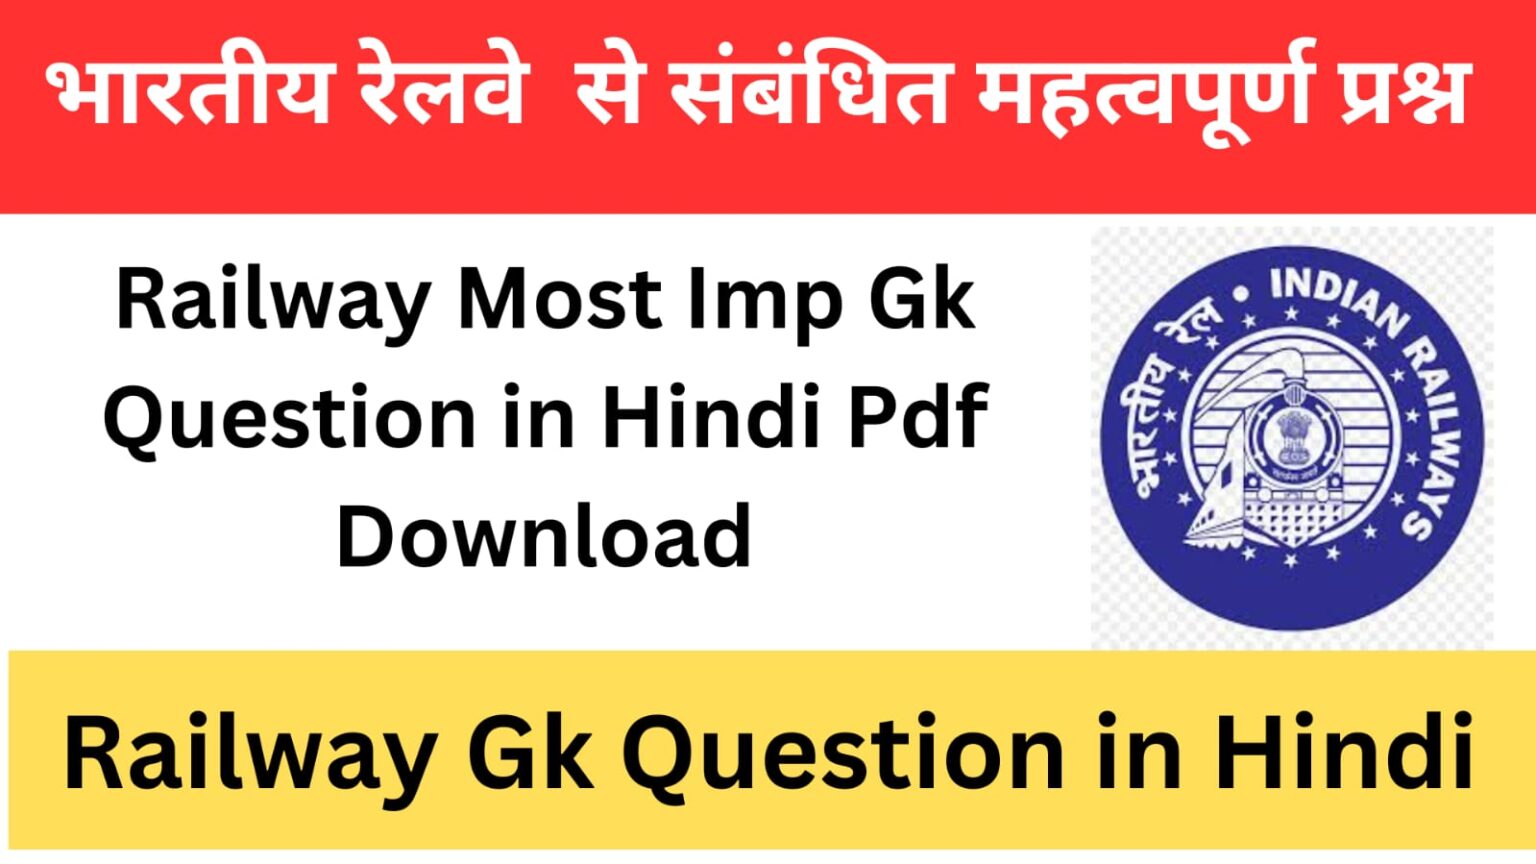 RAILWAY GK QUESTIONS IN HINDI